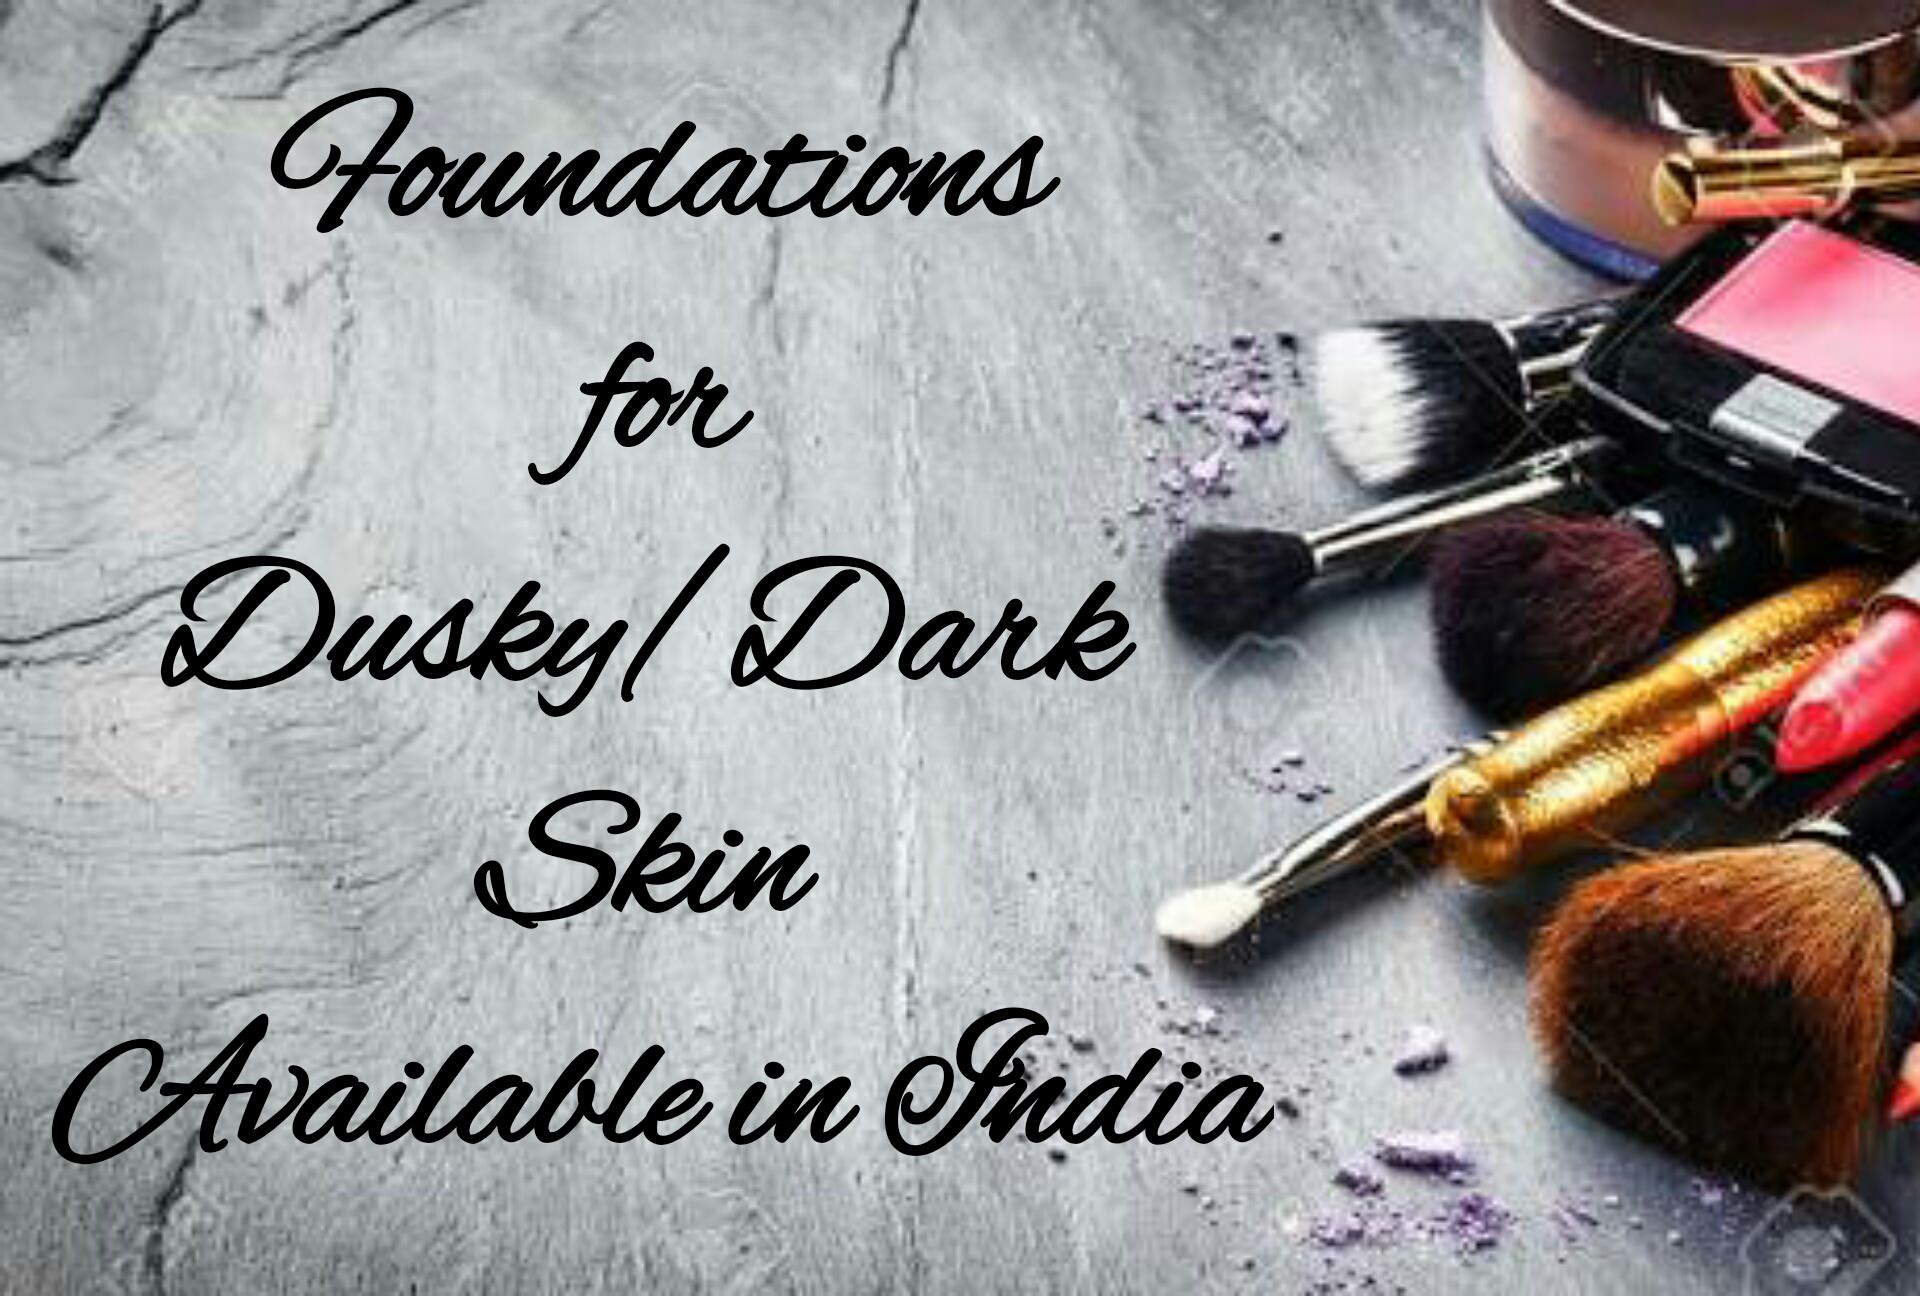 foundations for dusky dark skin in india